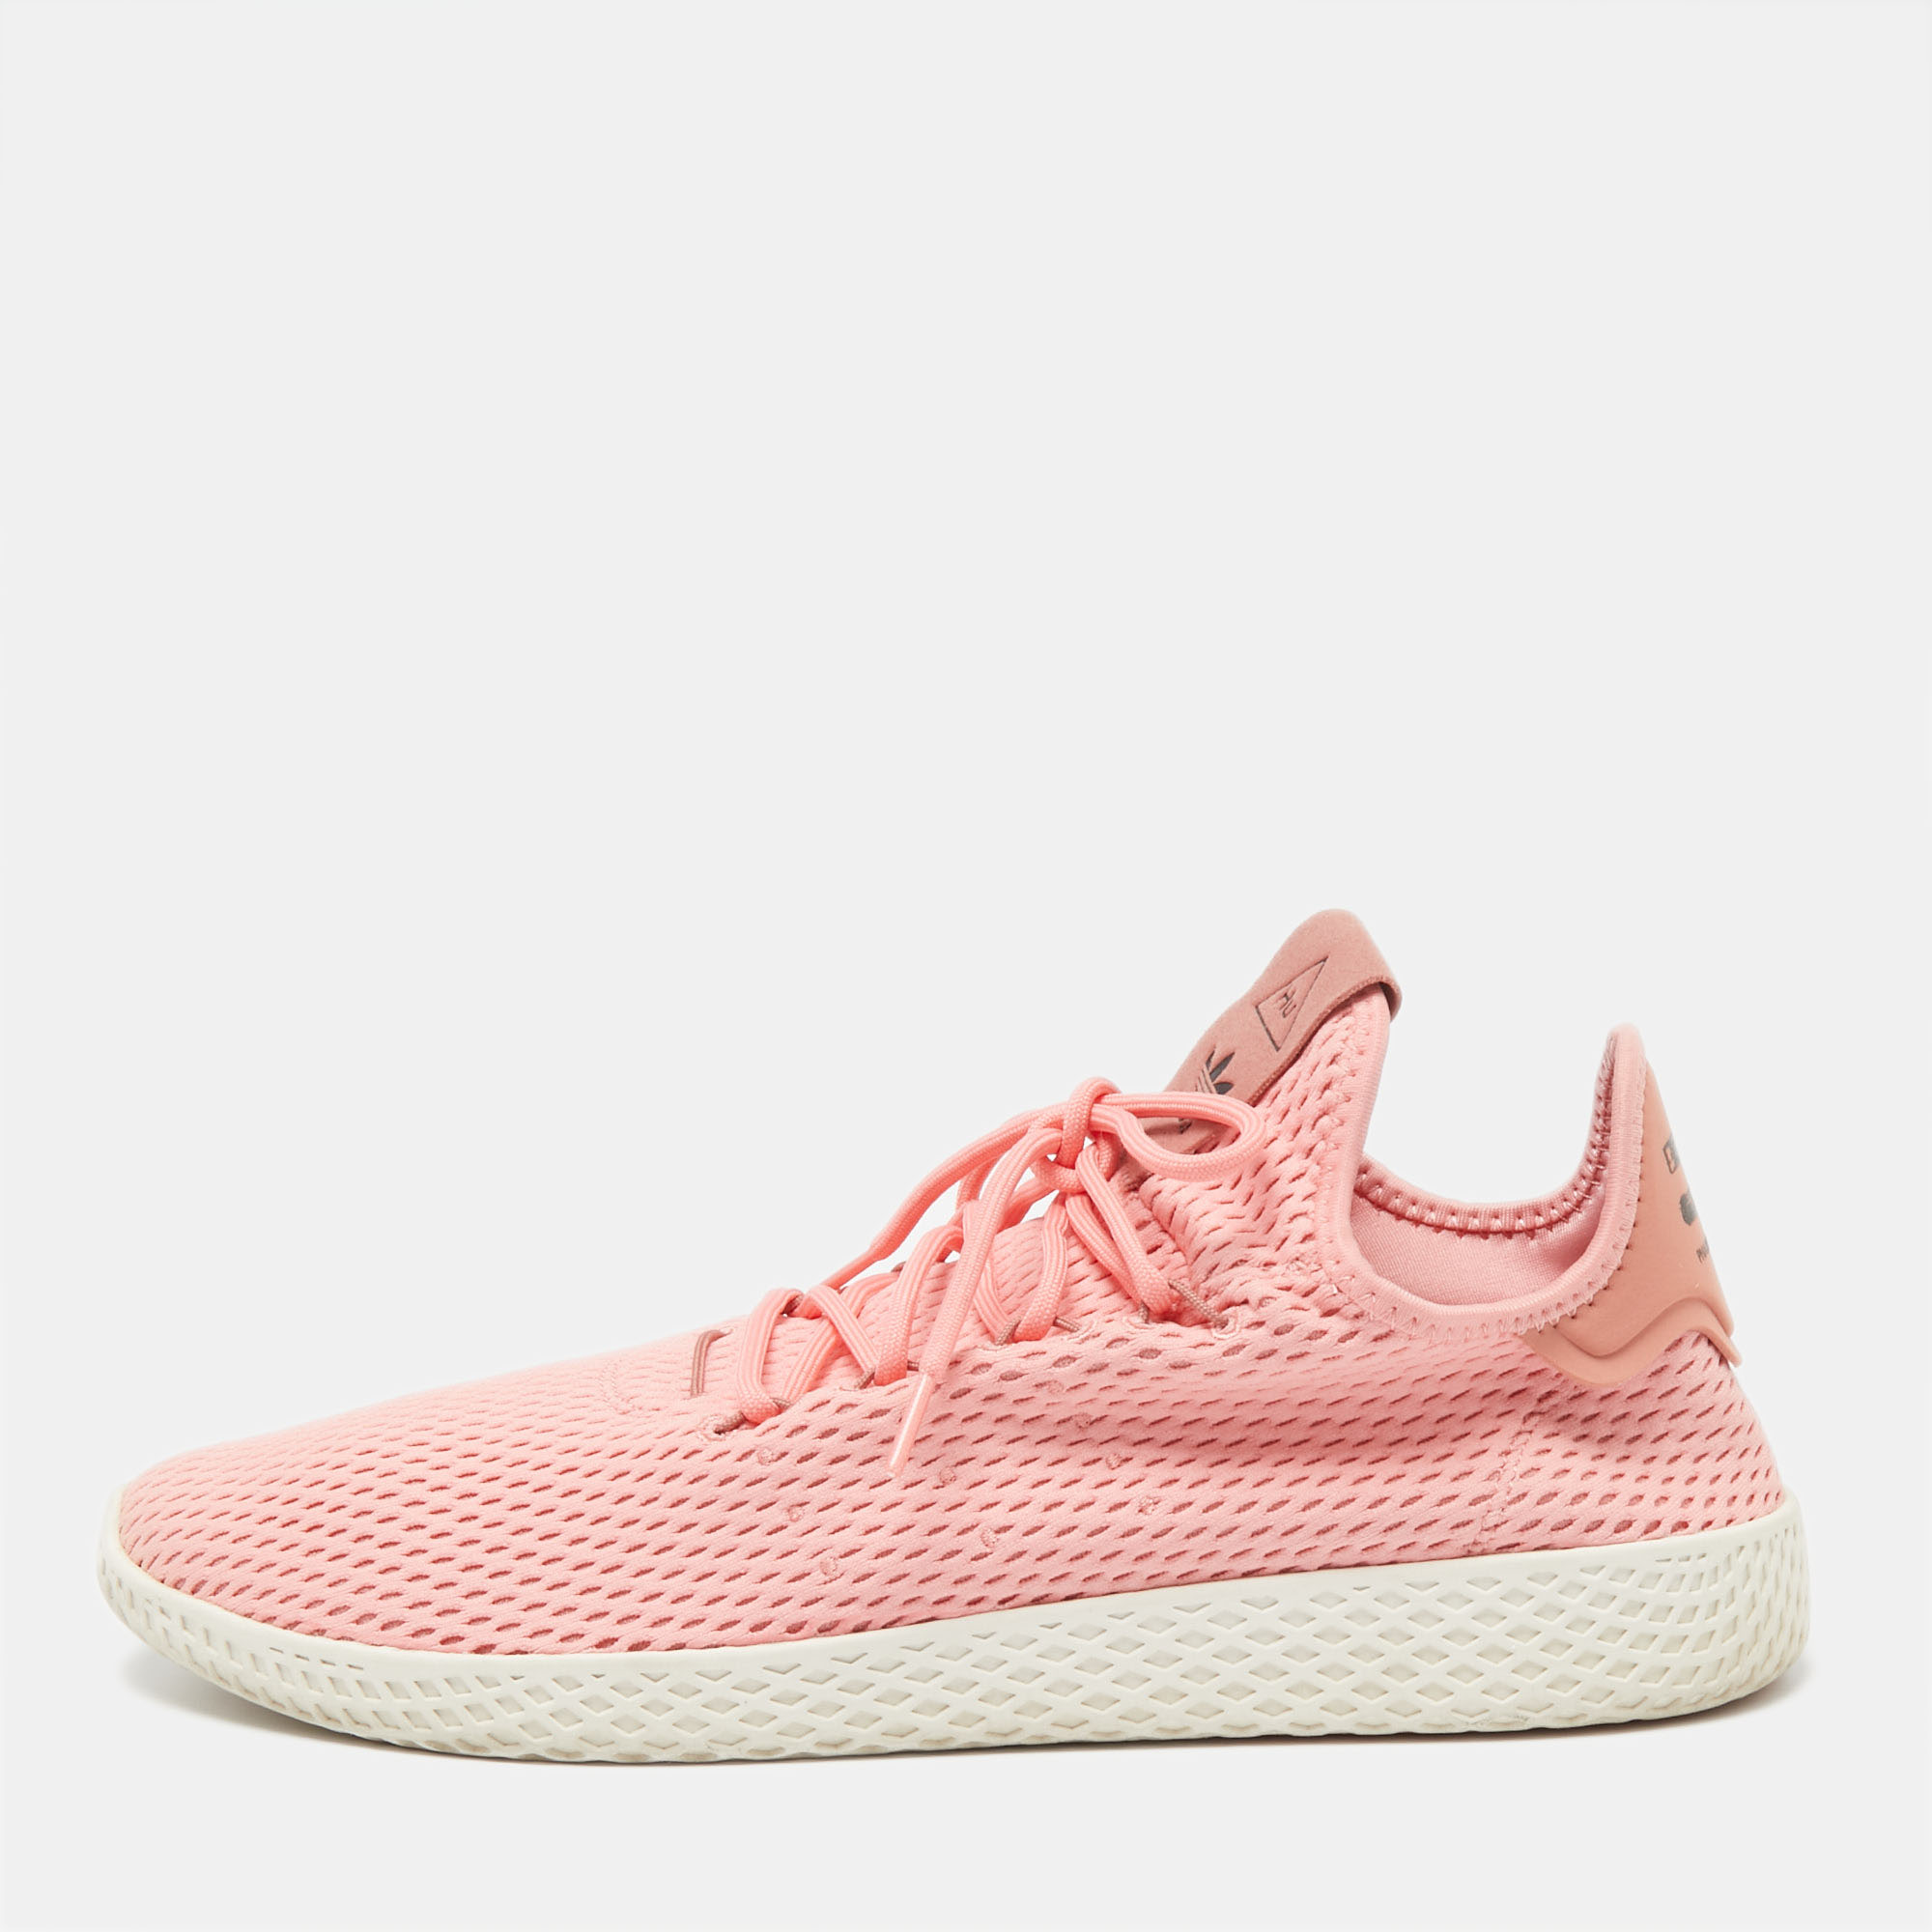 Pharrell williams adidas x pharell williams rose pink fabric tennis sneakers  size 47.5